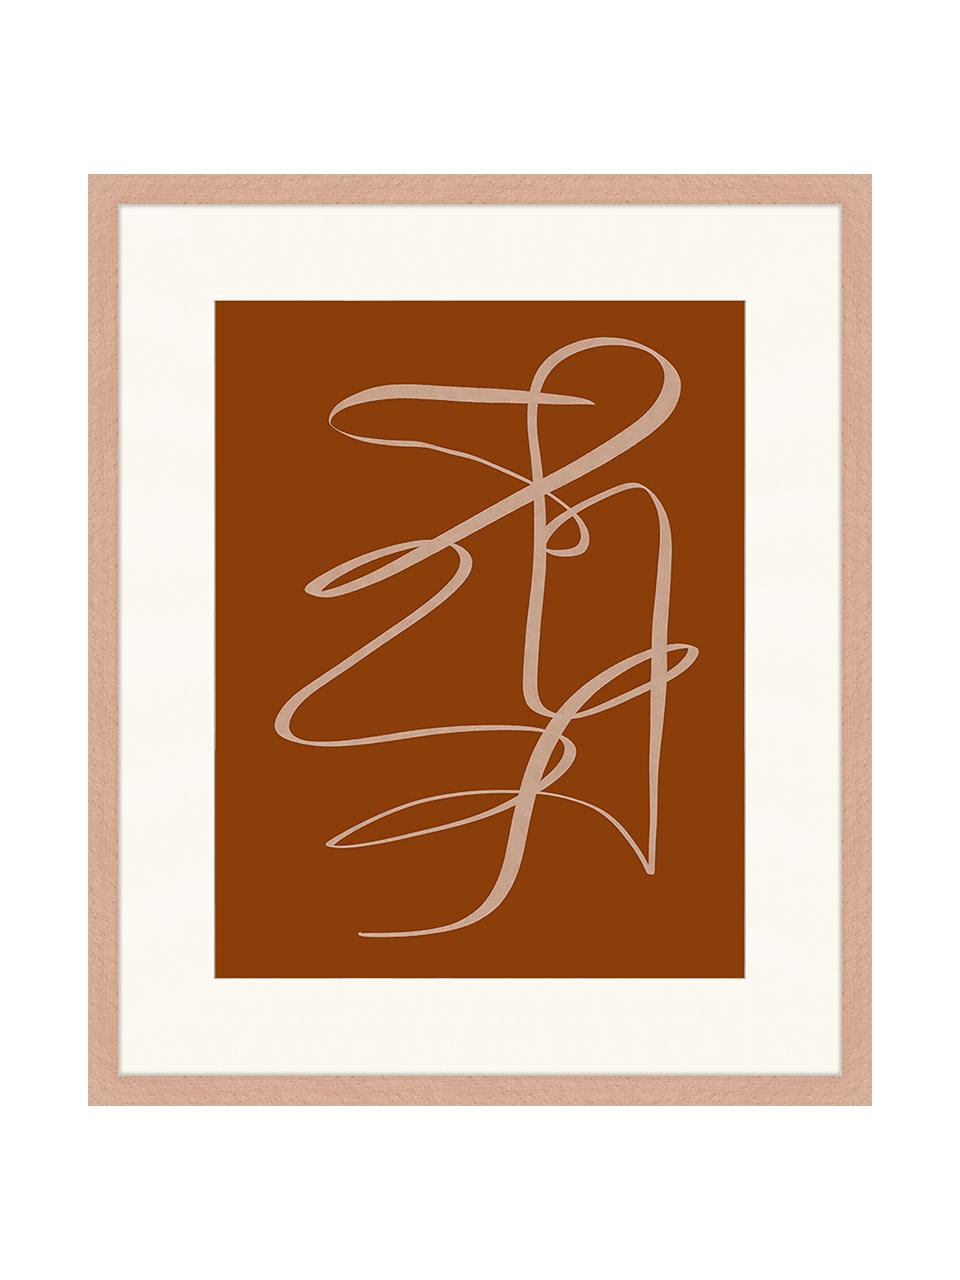 Gerahmter Digitaldruck Terracota Drawing, Bild: Digitaldruck auf Papier, , Rahmen: Holz, lackiert, Front: Plexiglas, Braun, Dunkelbeige, B 53 x H 63 cm